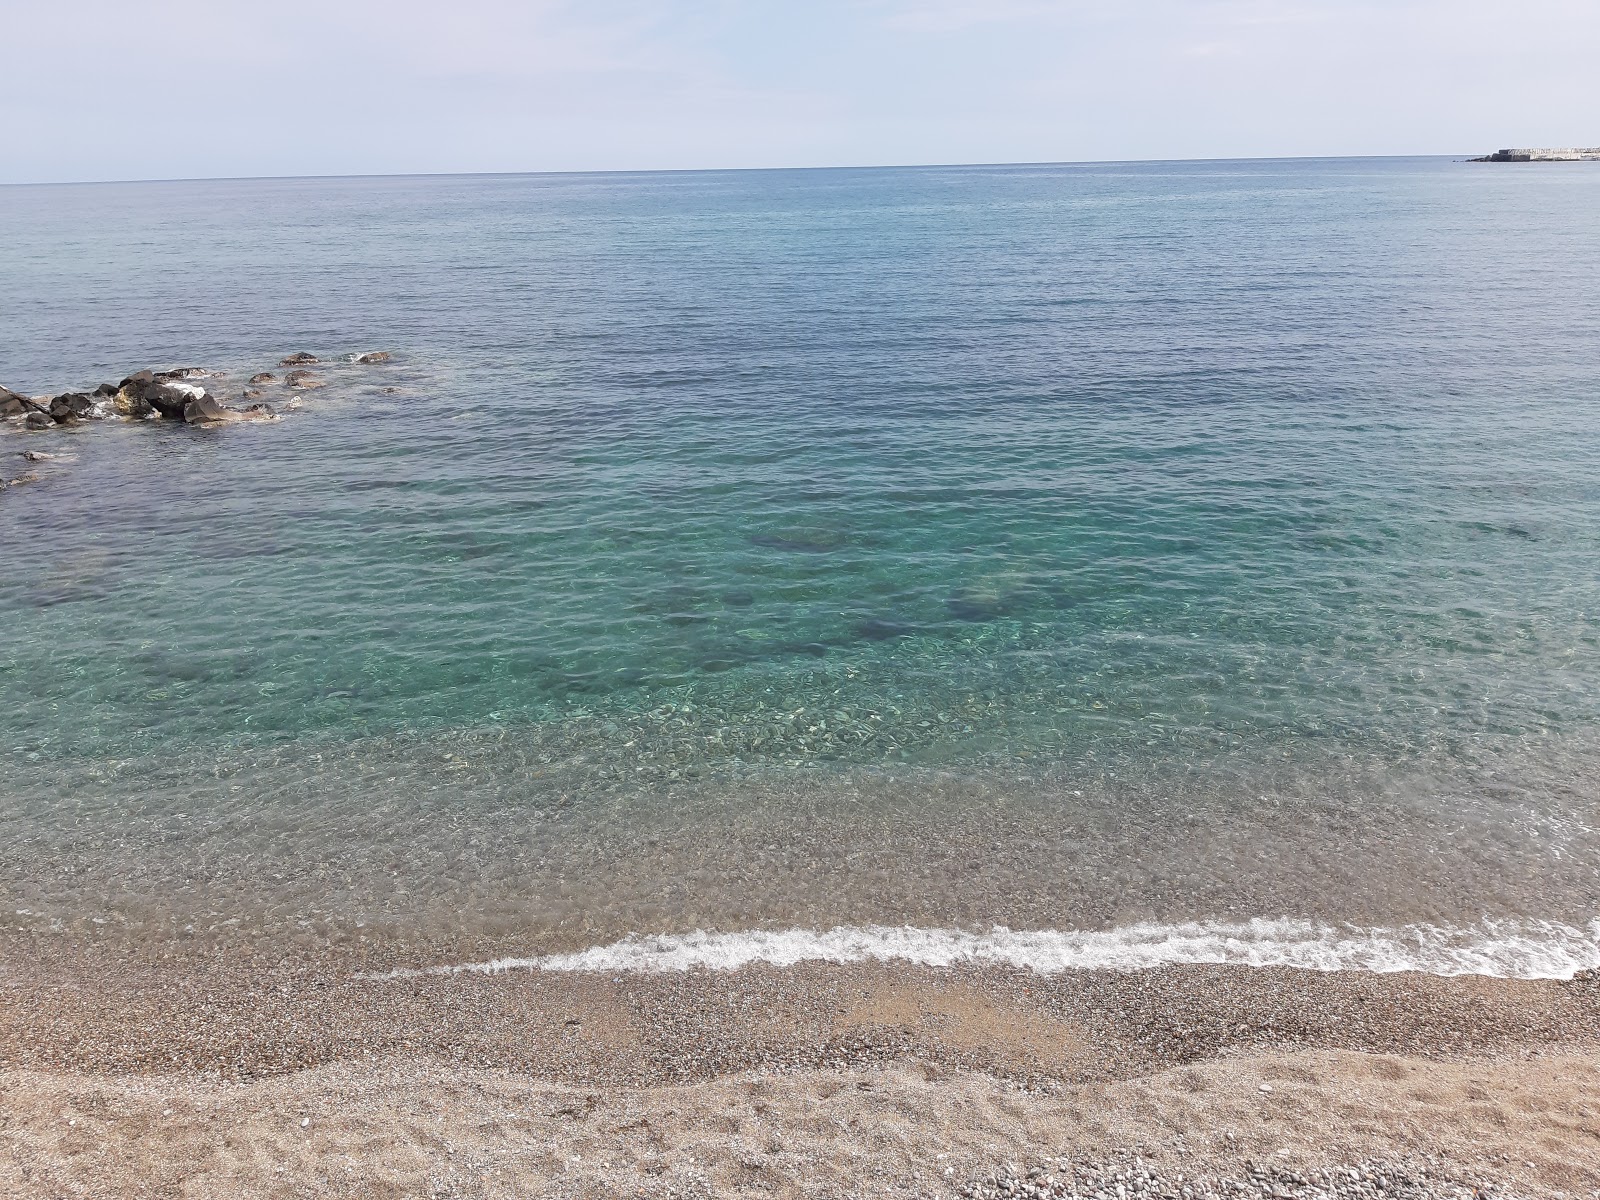 Photo of Spiaggia Giardini Naxos backed by cliffs